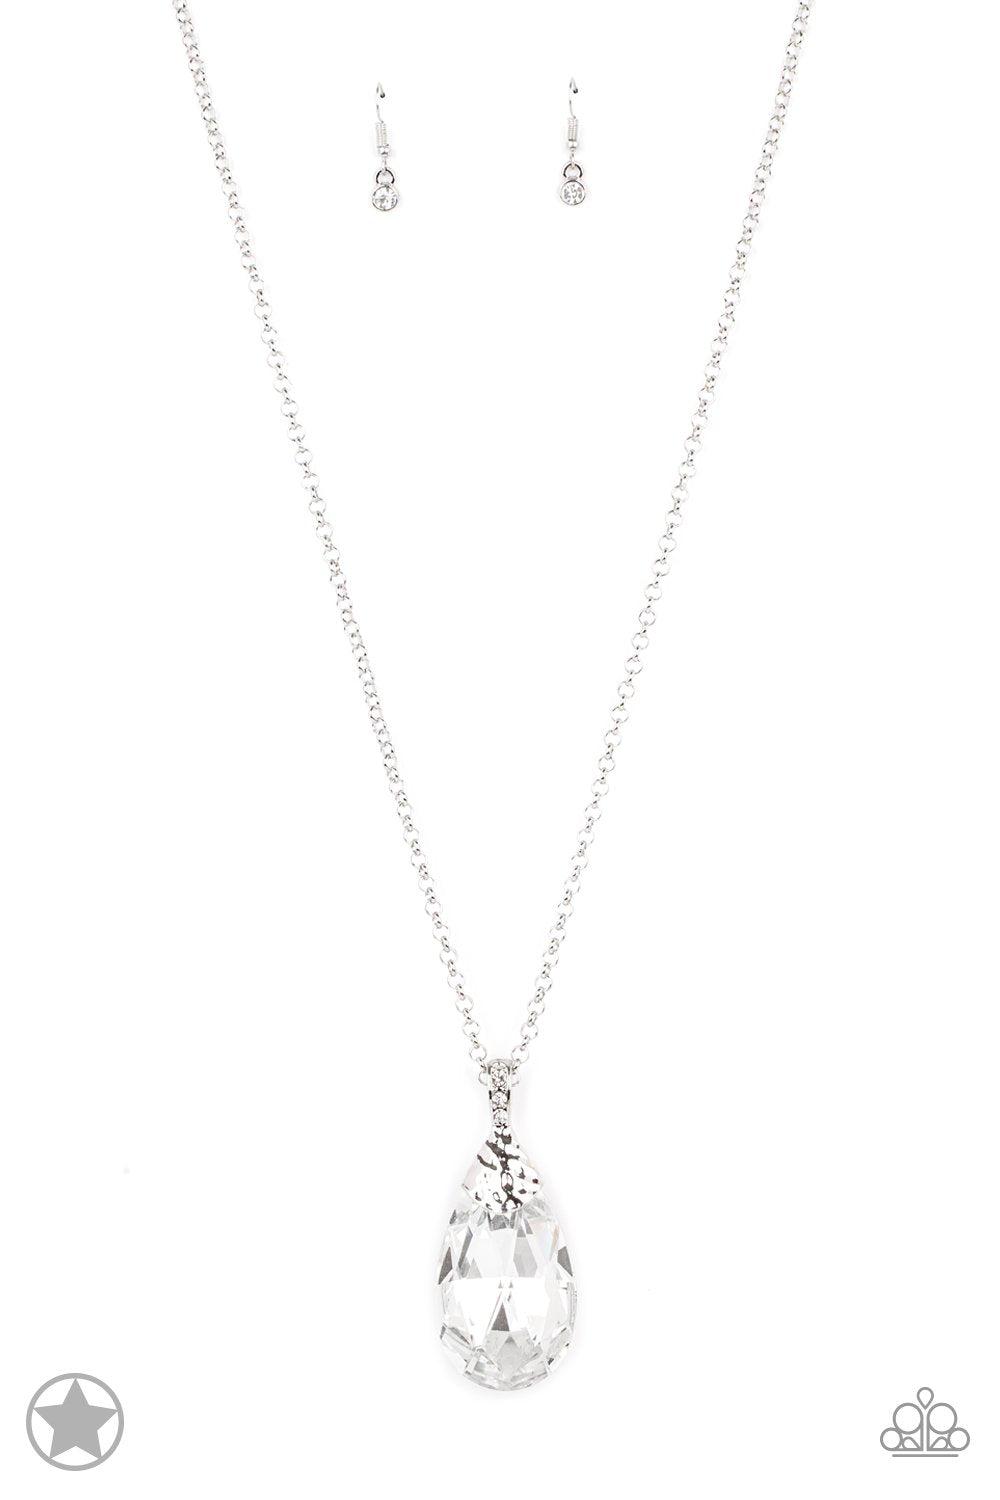 Spellbinding Sparkle White Rhinestone Necklace - Paparazzi Accessories - lightbox -CarasShop.com - $5 Jewelry by Cara Jewels